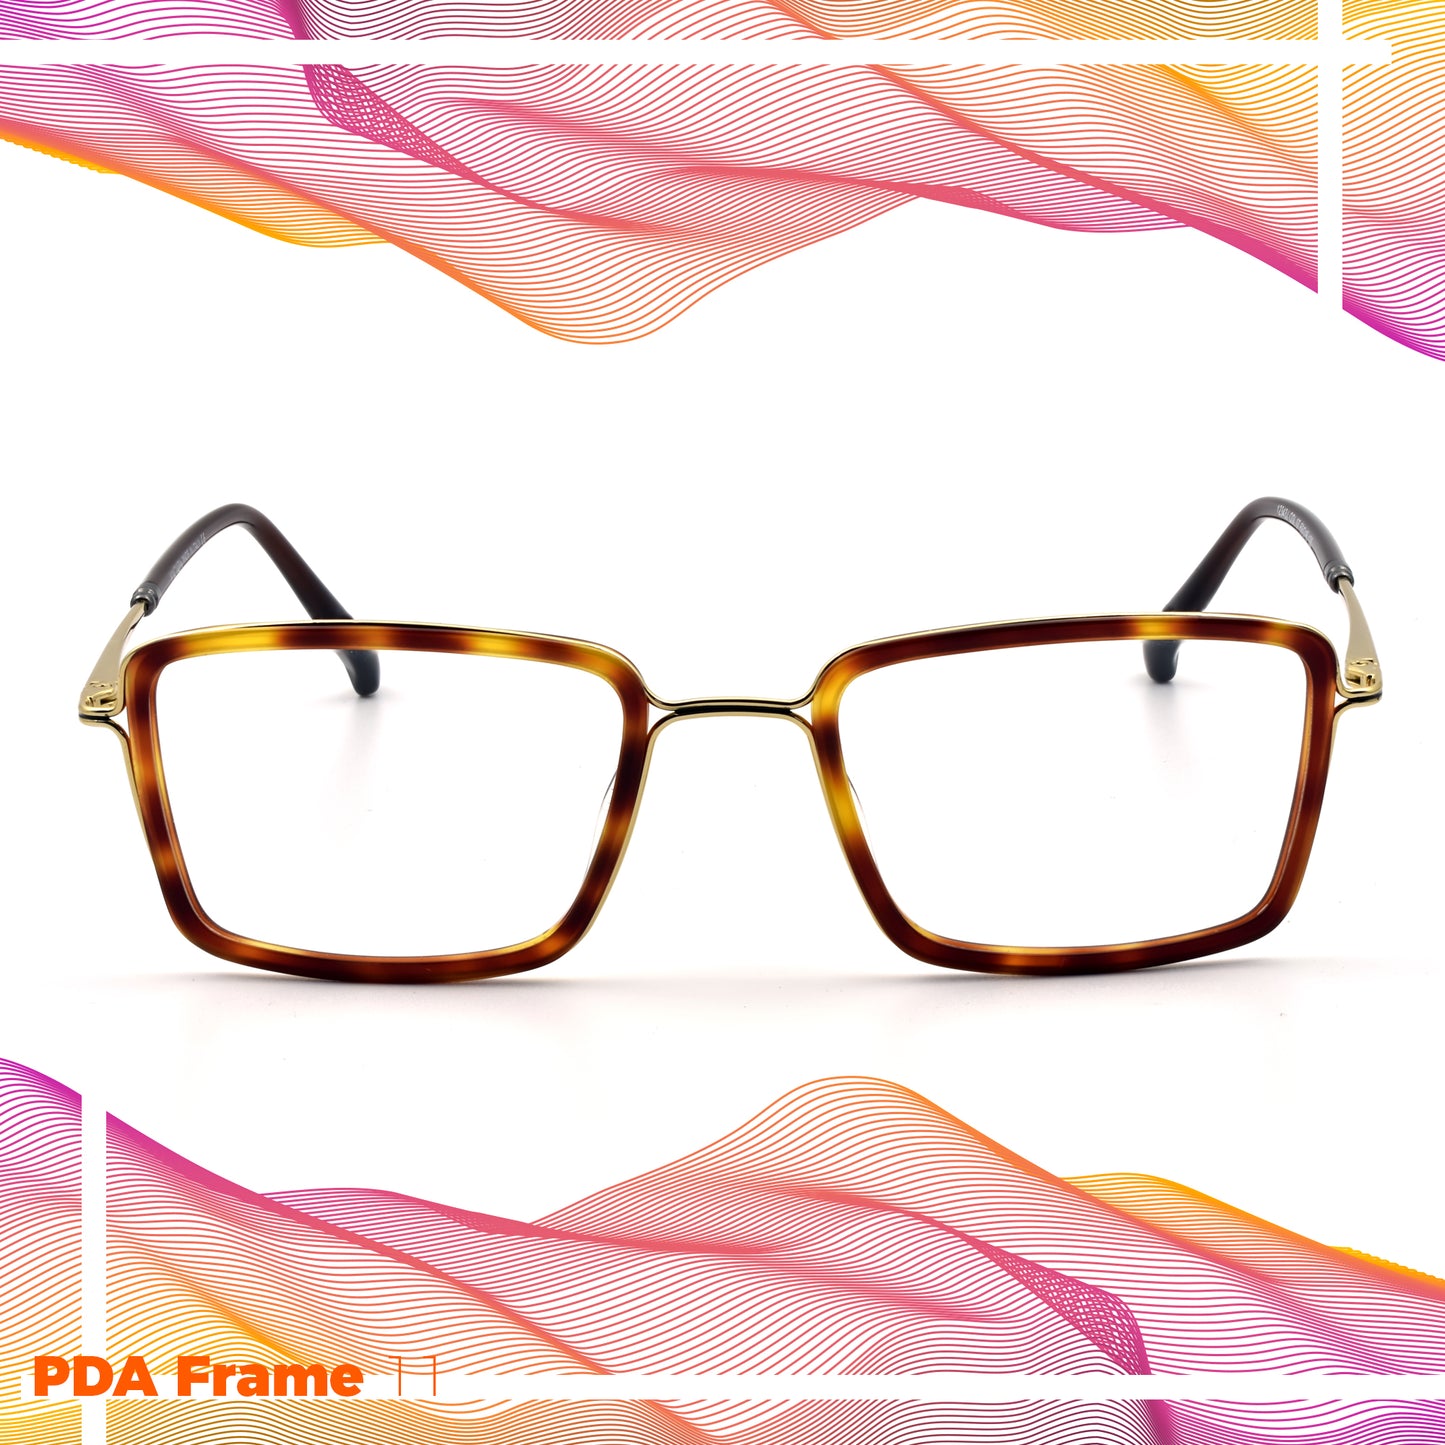 Trendy Stylish Optic Frame | PDA Frame 11 | Premium Quality